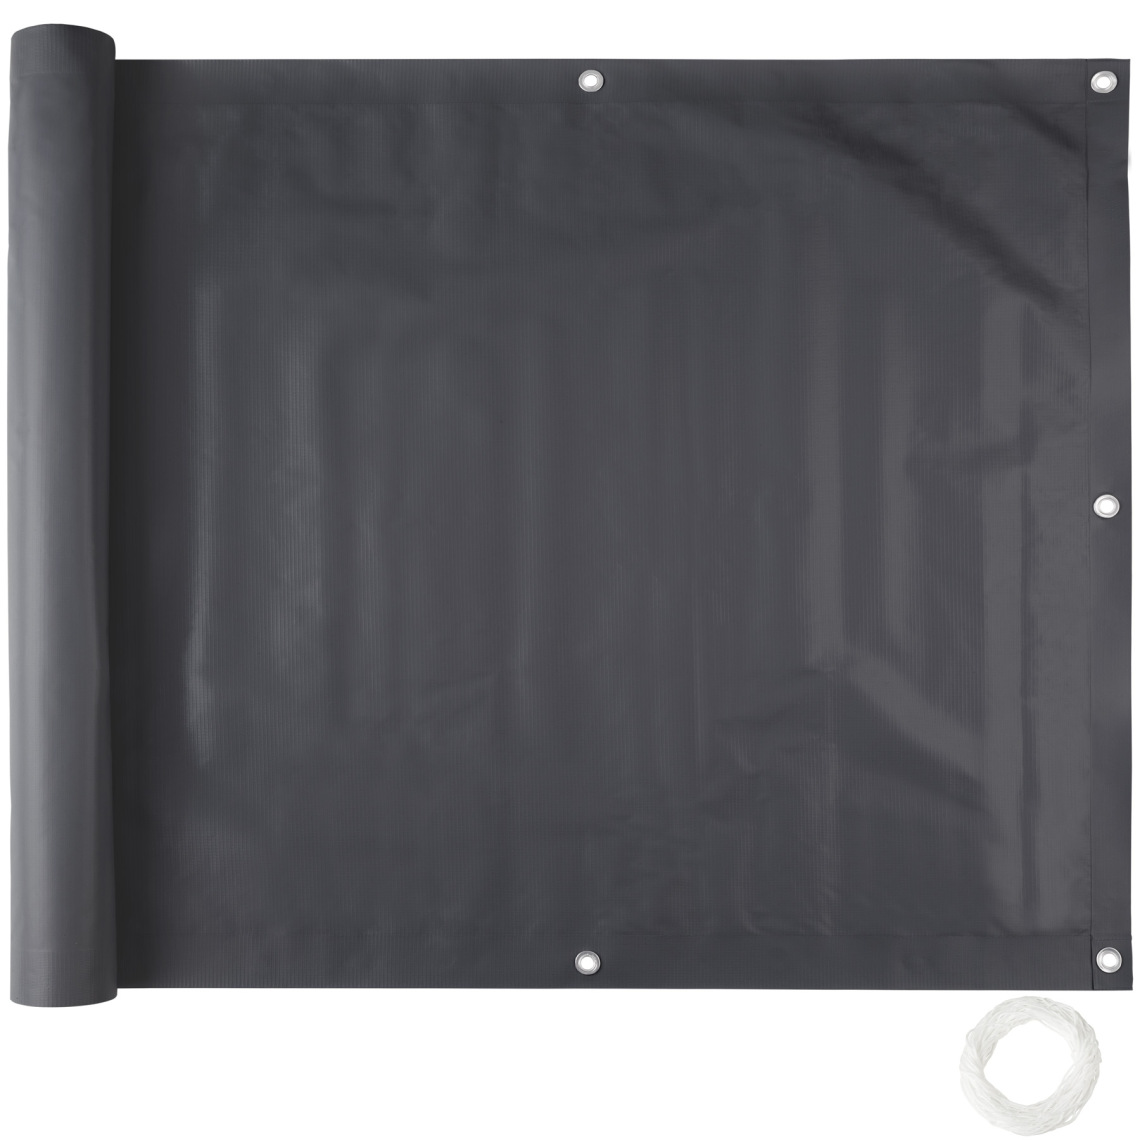 Tectake - Brise vue PVC pour balcon, version 1 - noir - 75 cm - Claustras